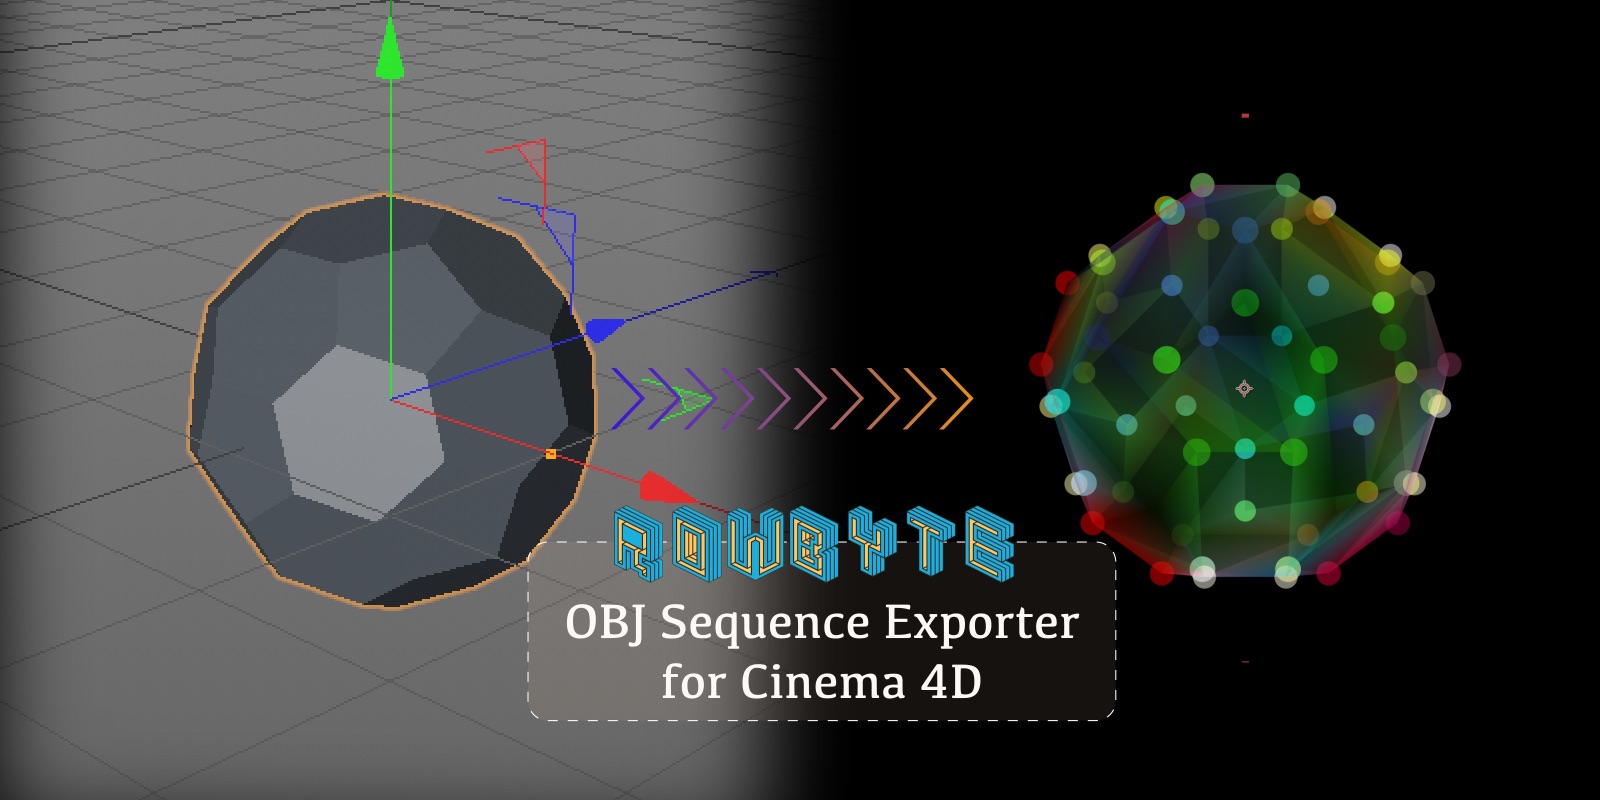 OBJ Sequence Exporter for Cinema 4D